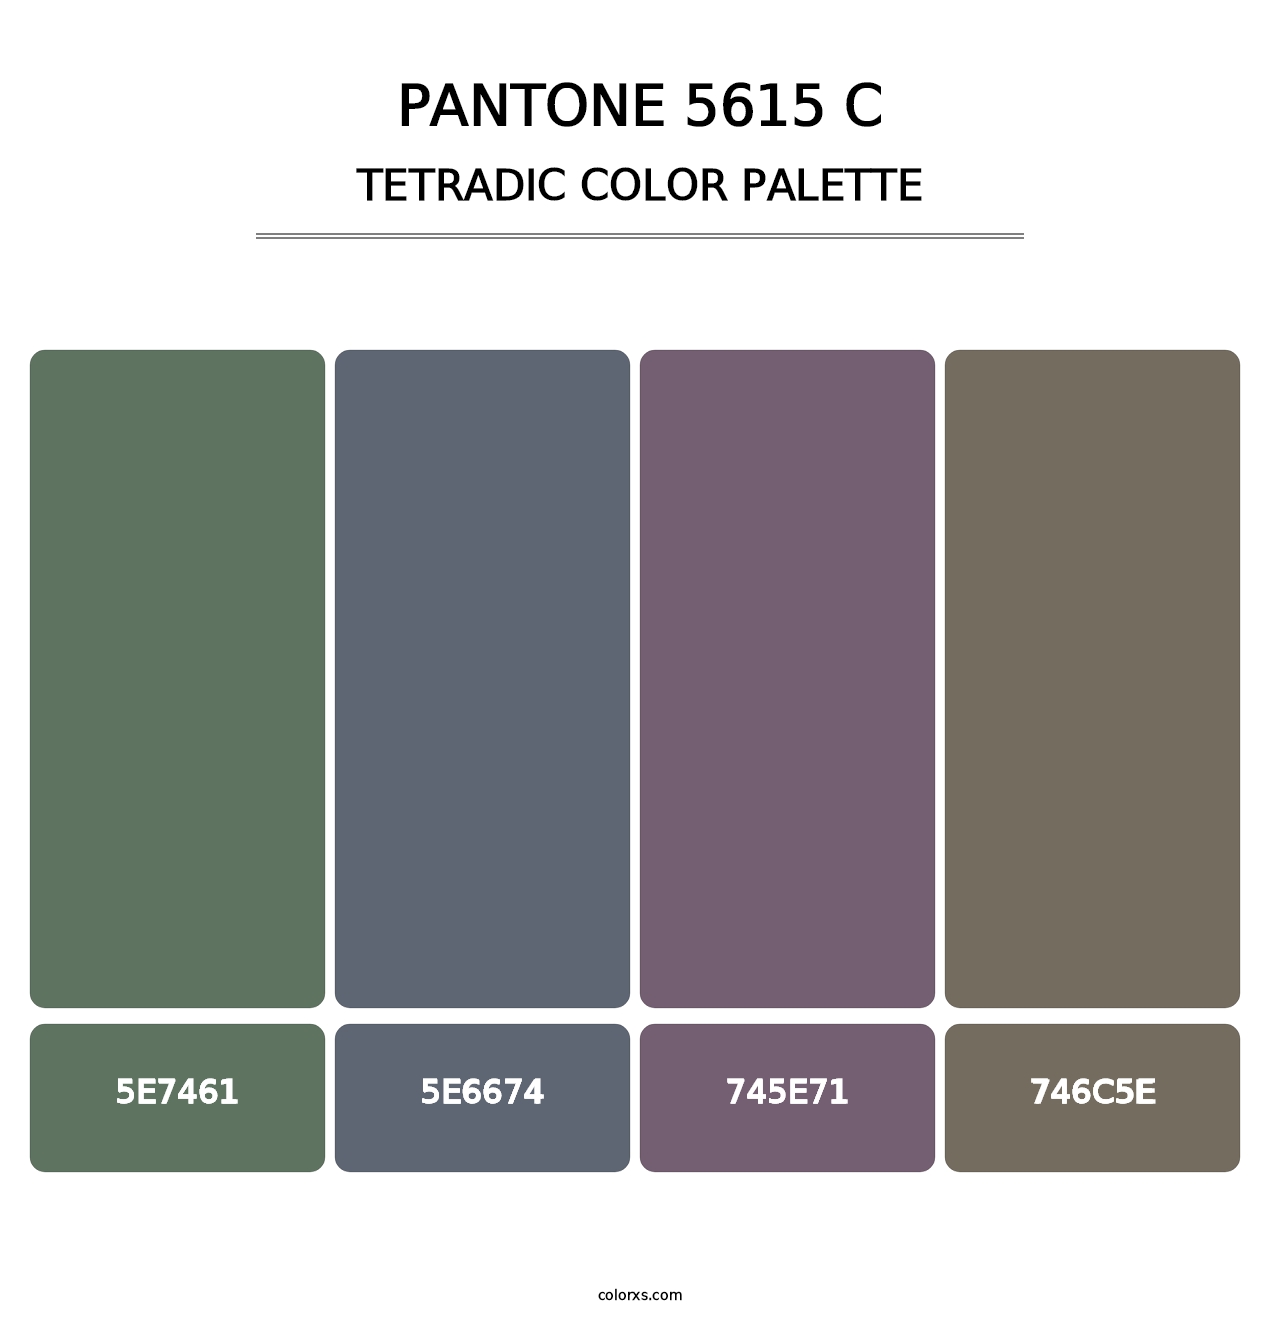 PANTONE 5615 C - Tetradic Color Palette